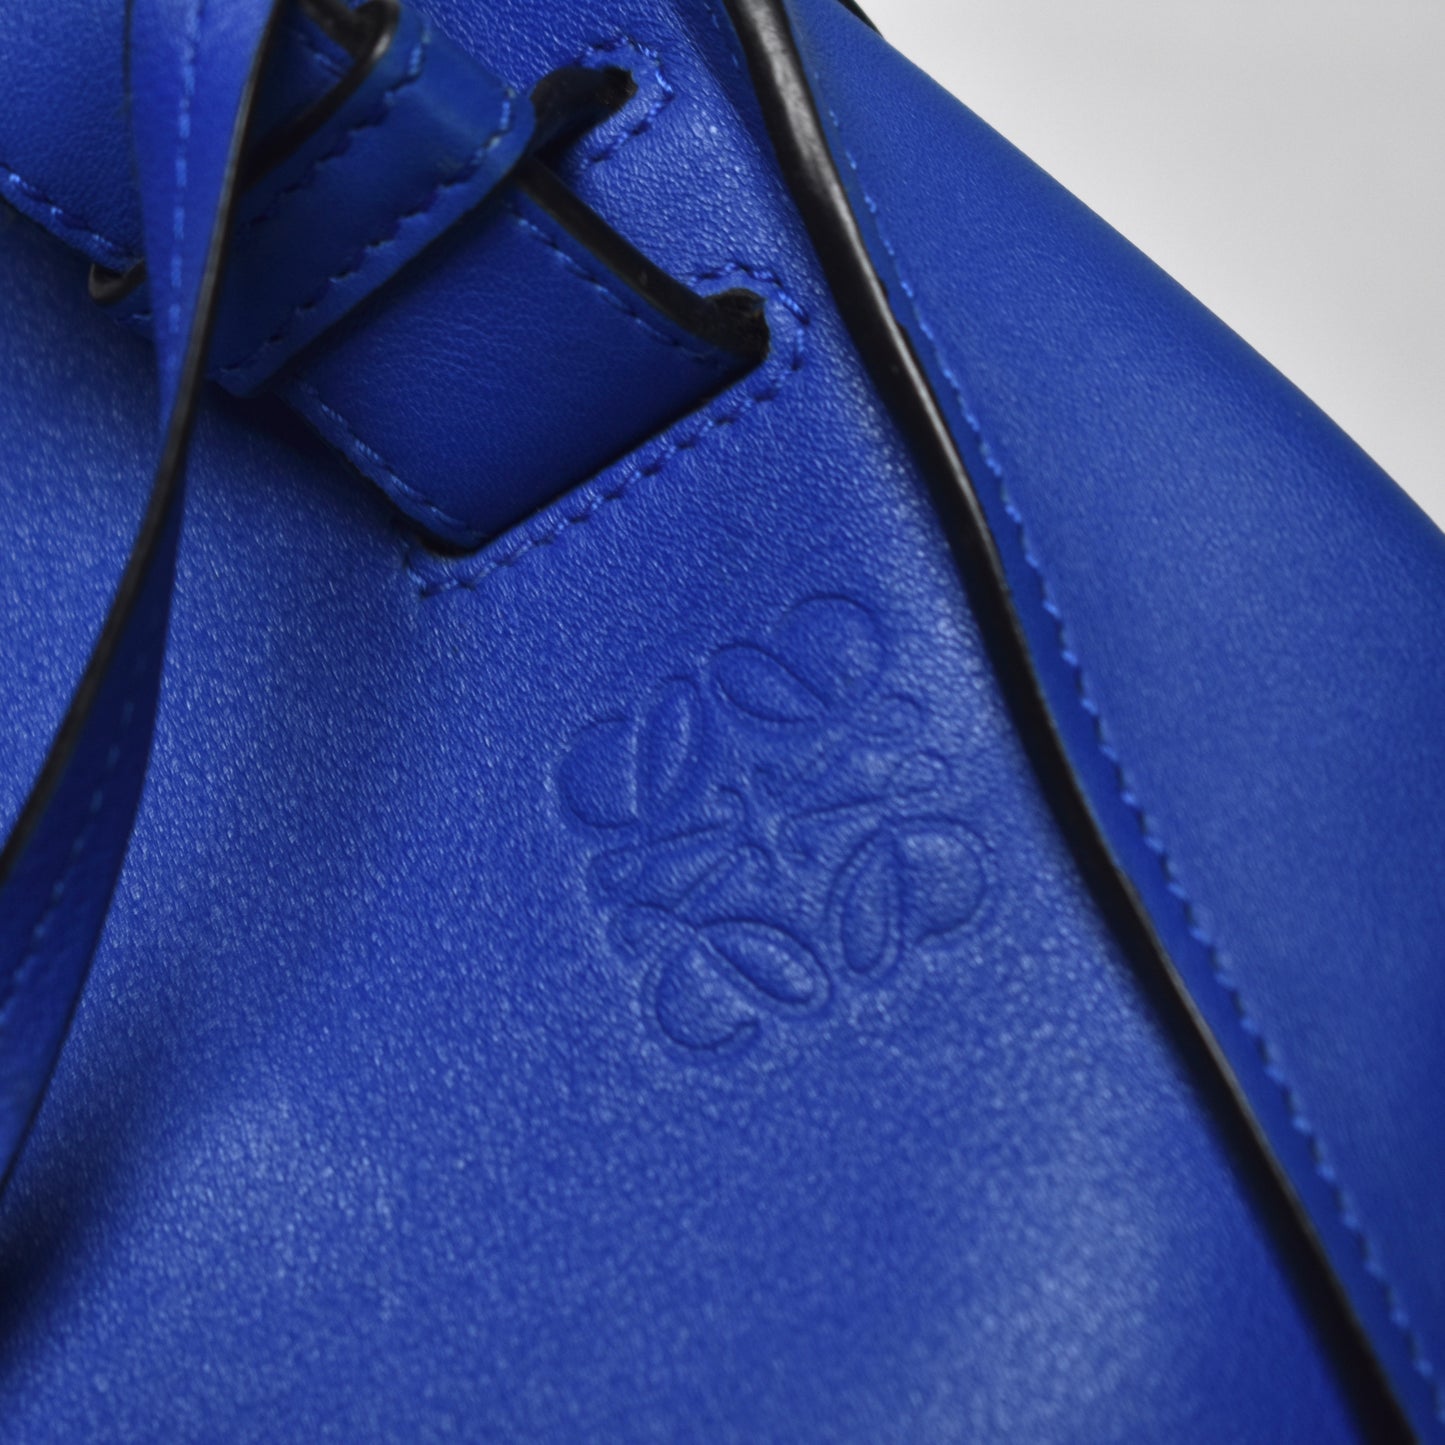 Loewe Blue Leather Large Hammock Bag